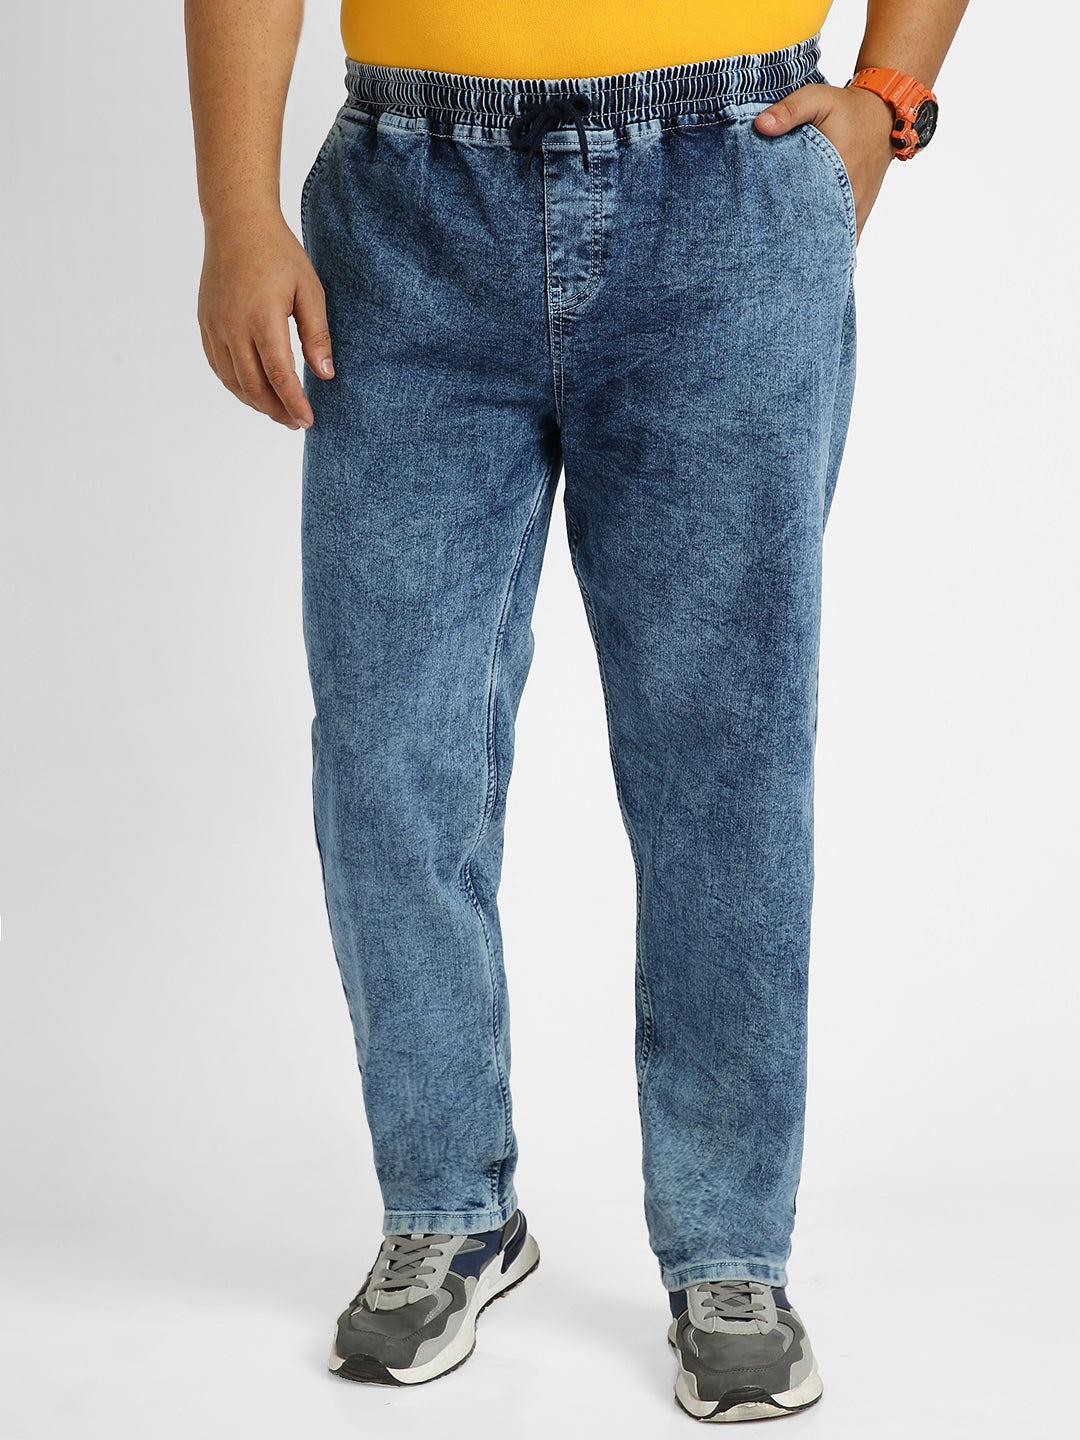 Urbano Plus Men's Light Blue Regular Fit Washed Jogger Jeans Stretchable